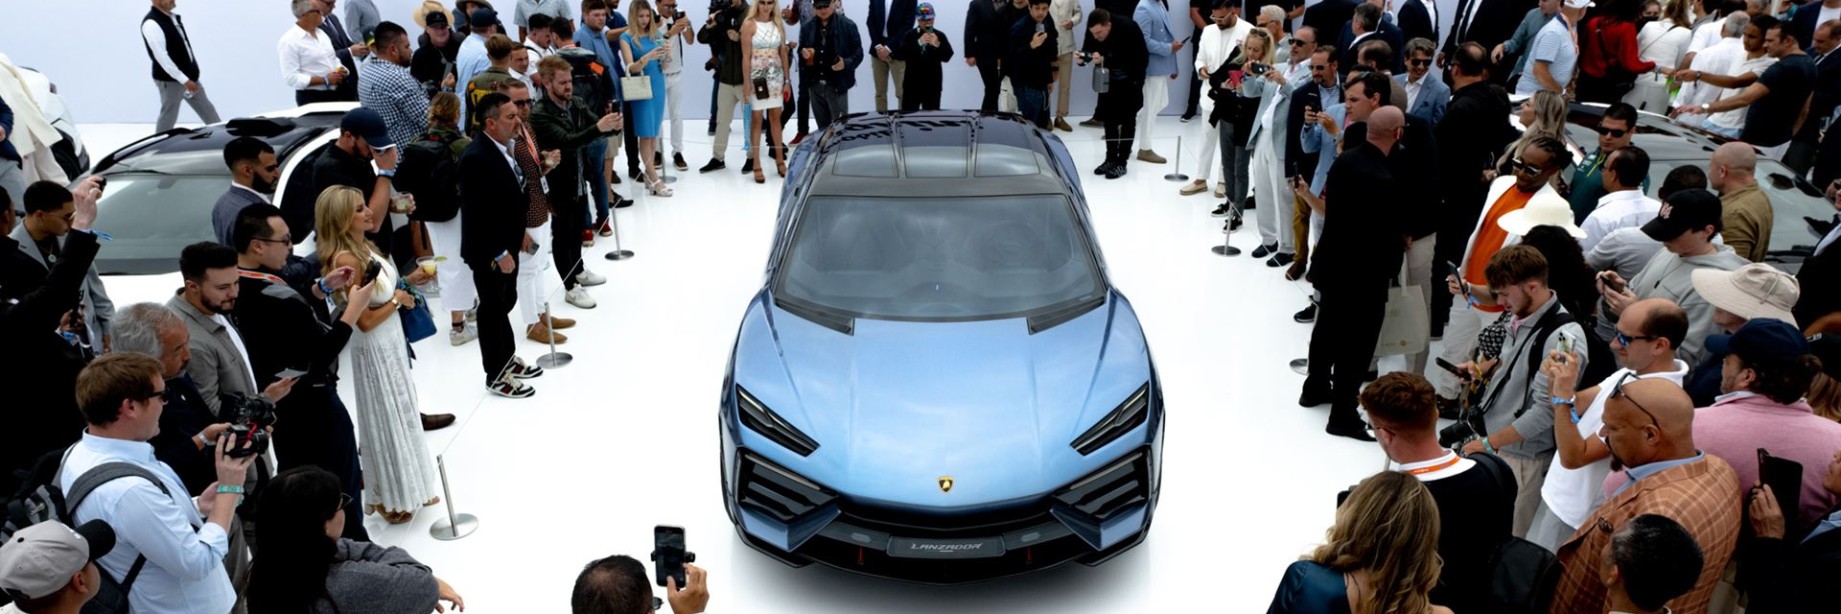 Conceptul Lamborghini Lanzador: vizionarul, rebelul, Ultra GT